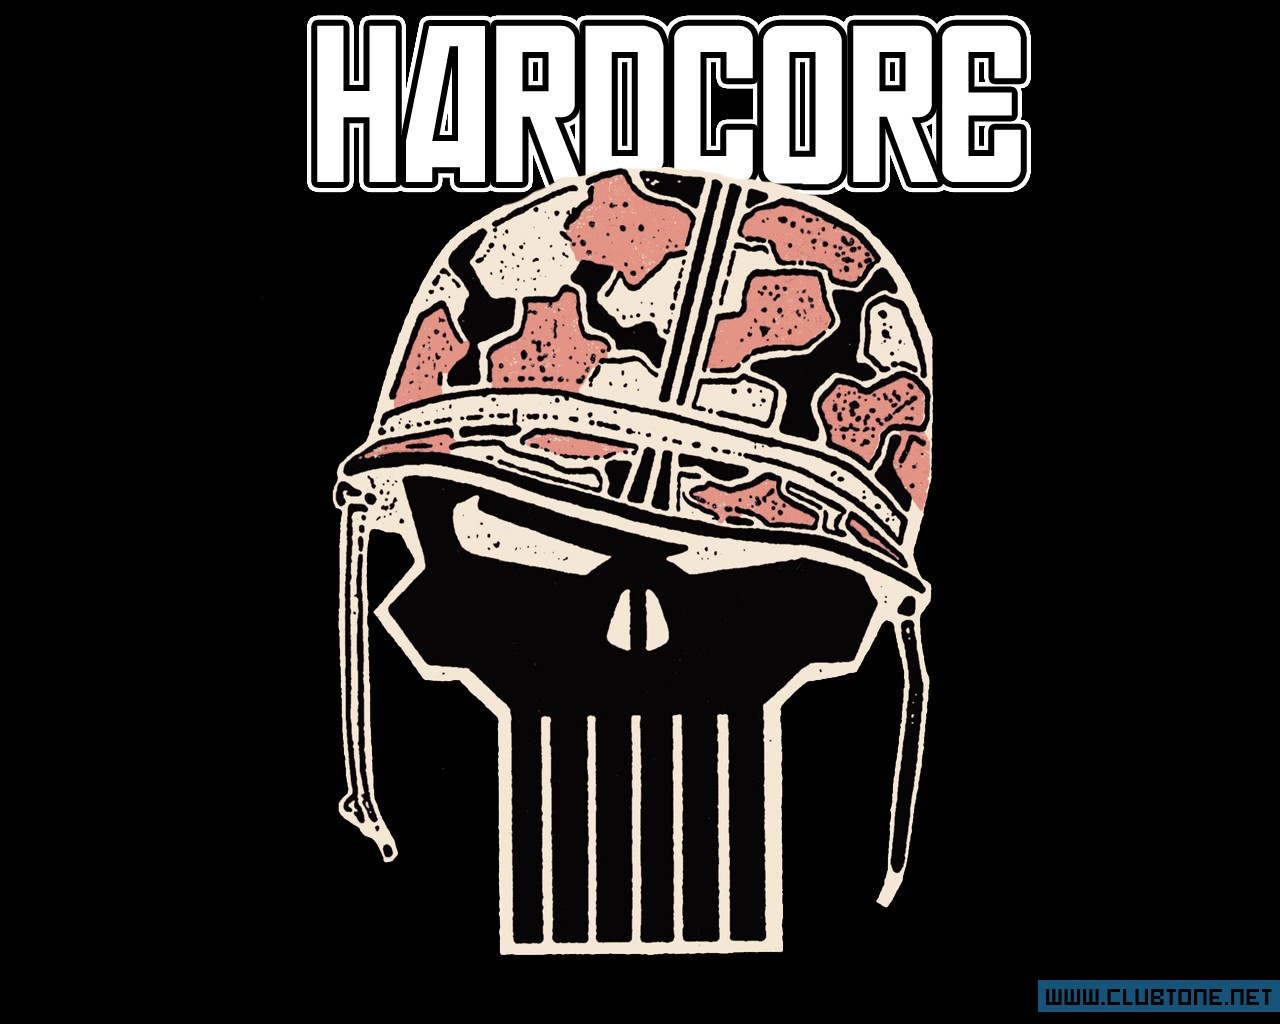 hard core, череп в каске  